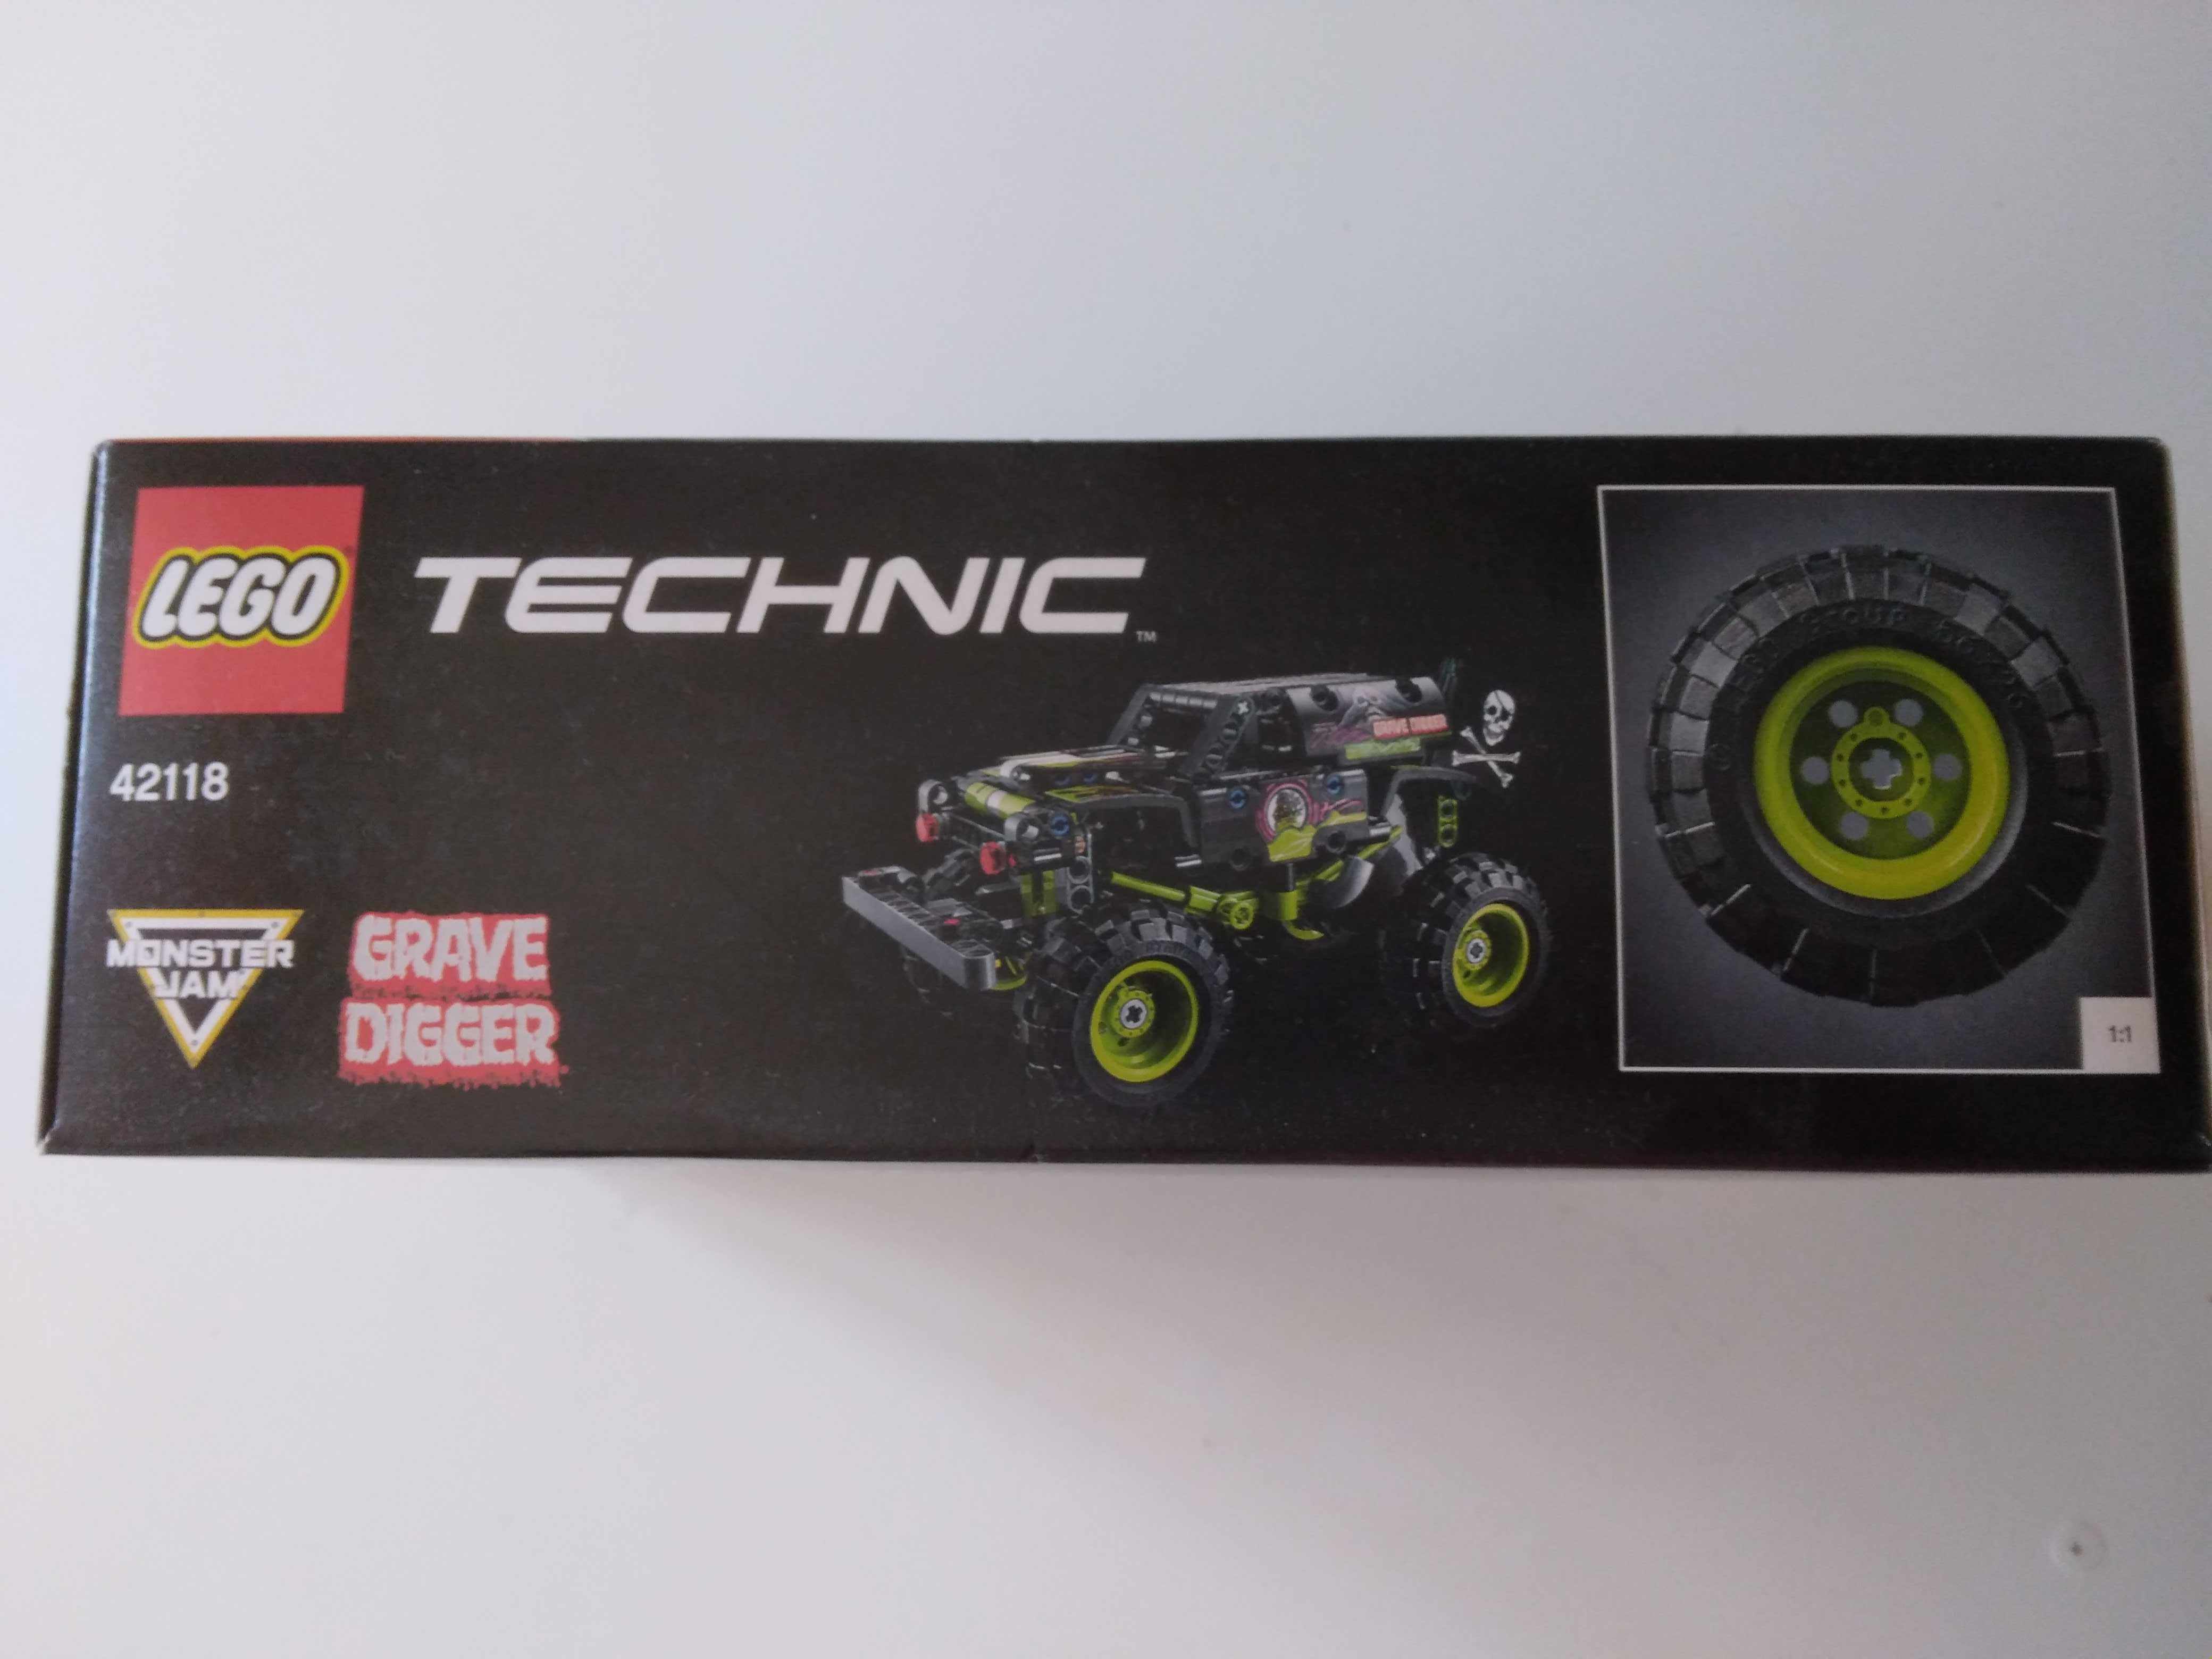 LEGO Technic 42118 camioane gigant 2in1, Monster Jam Grave Digger, nou